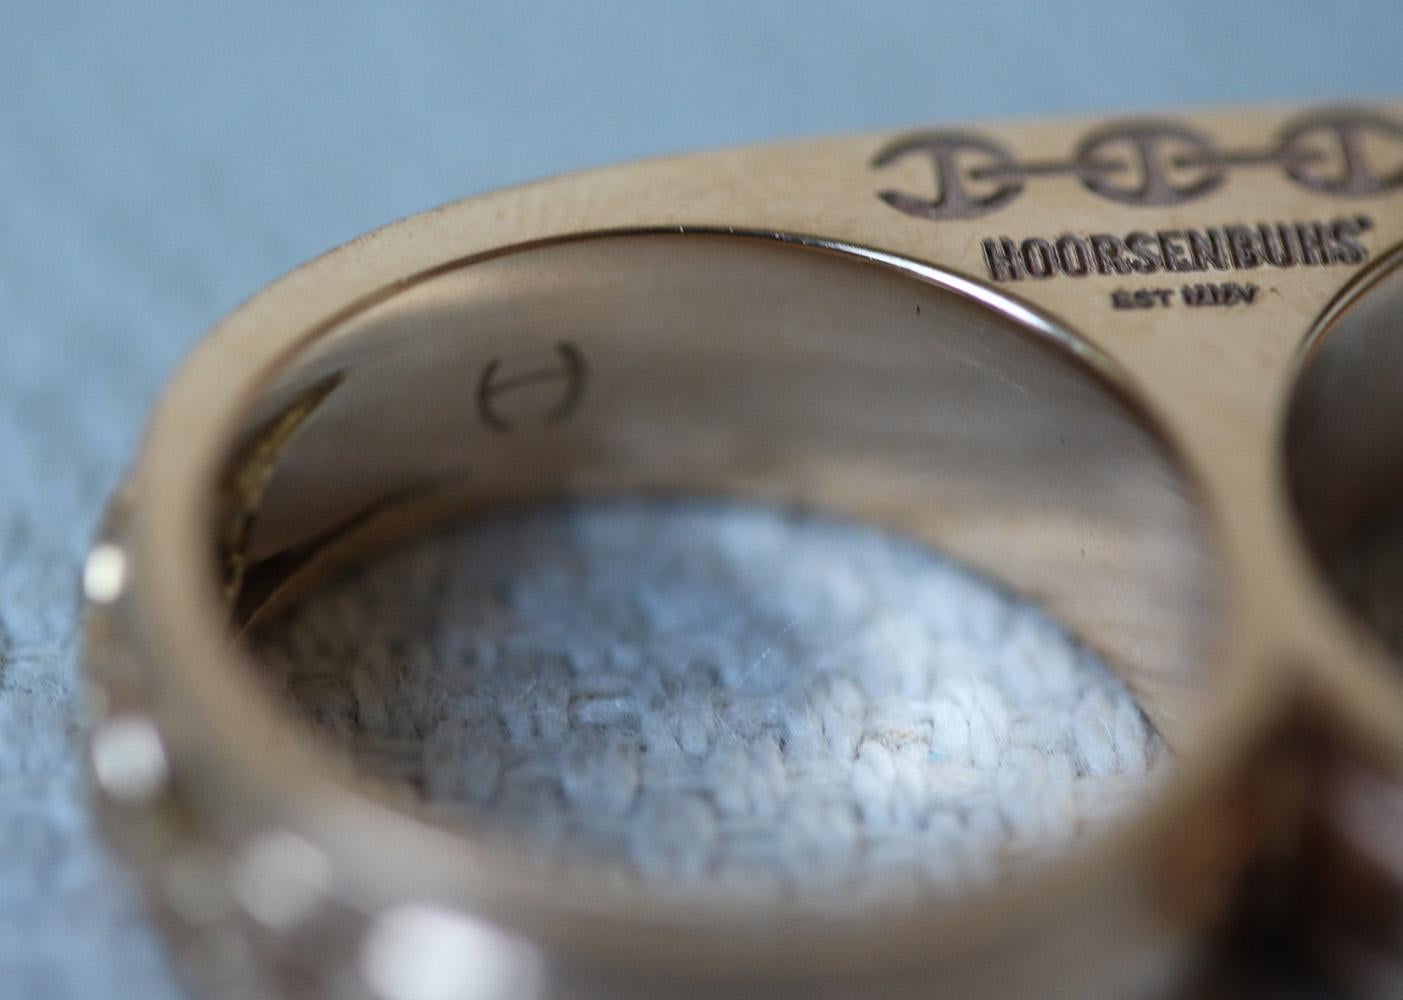 Hoorsenbuhs Diamond Double Knuckle Ring 2